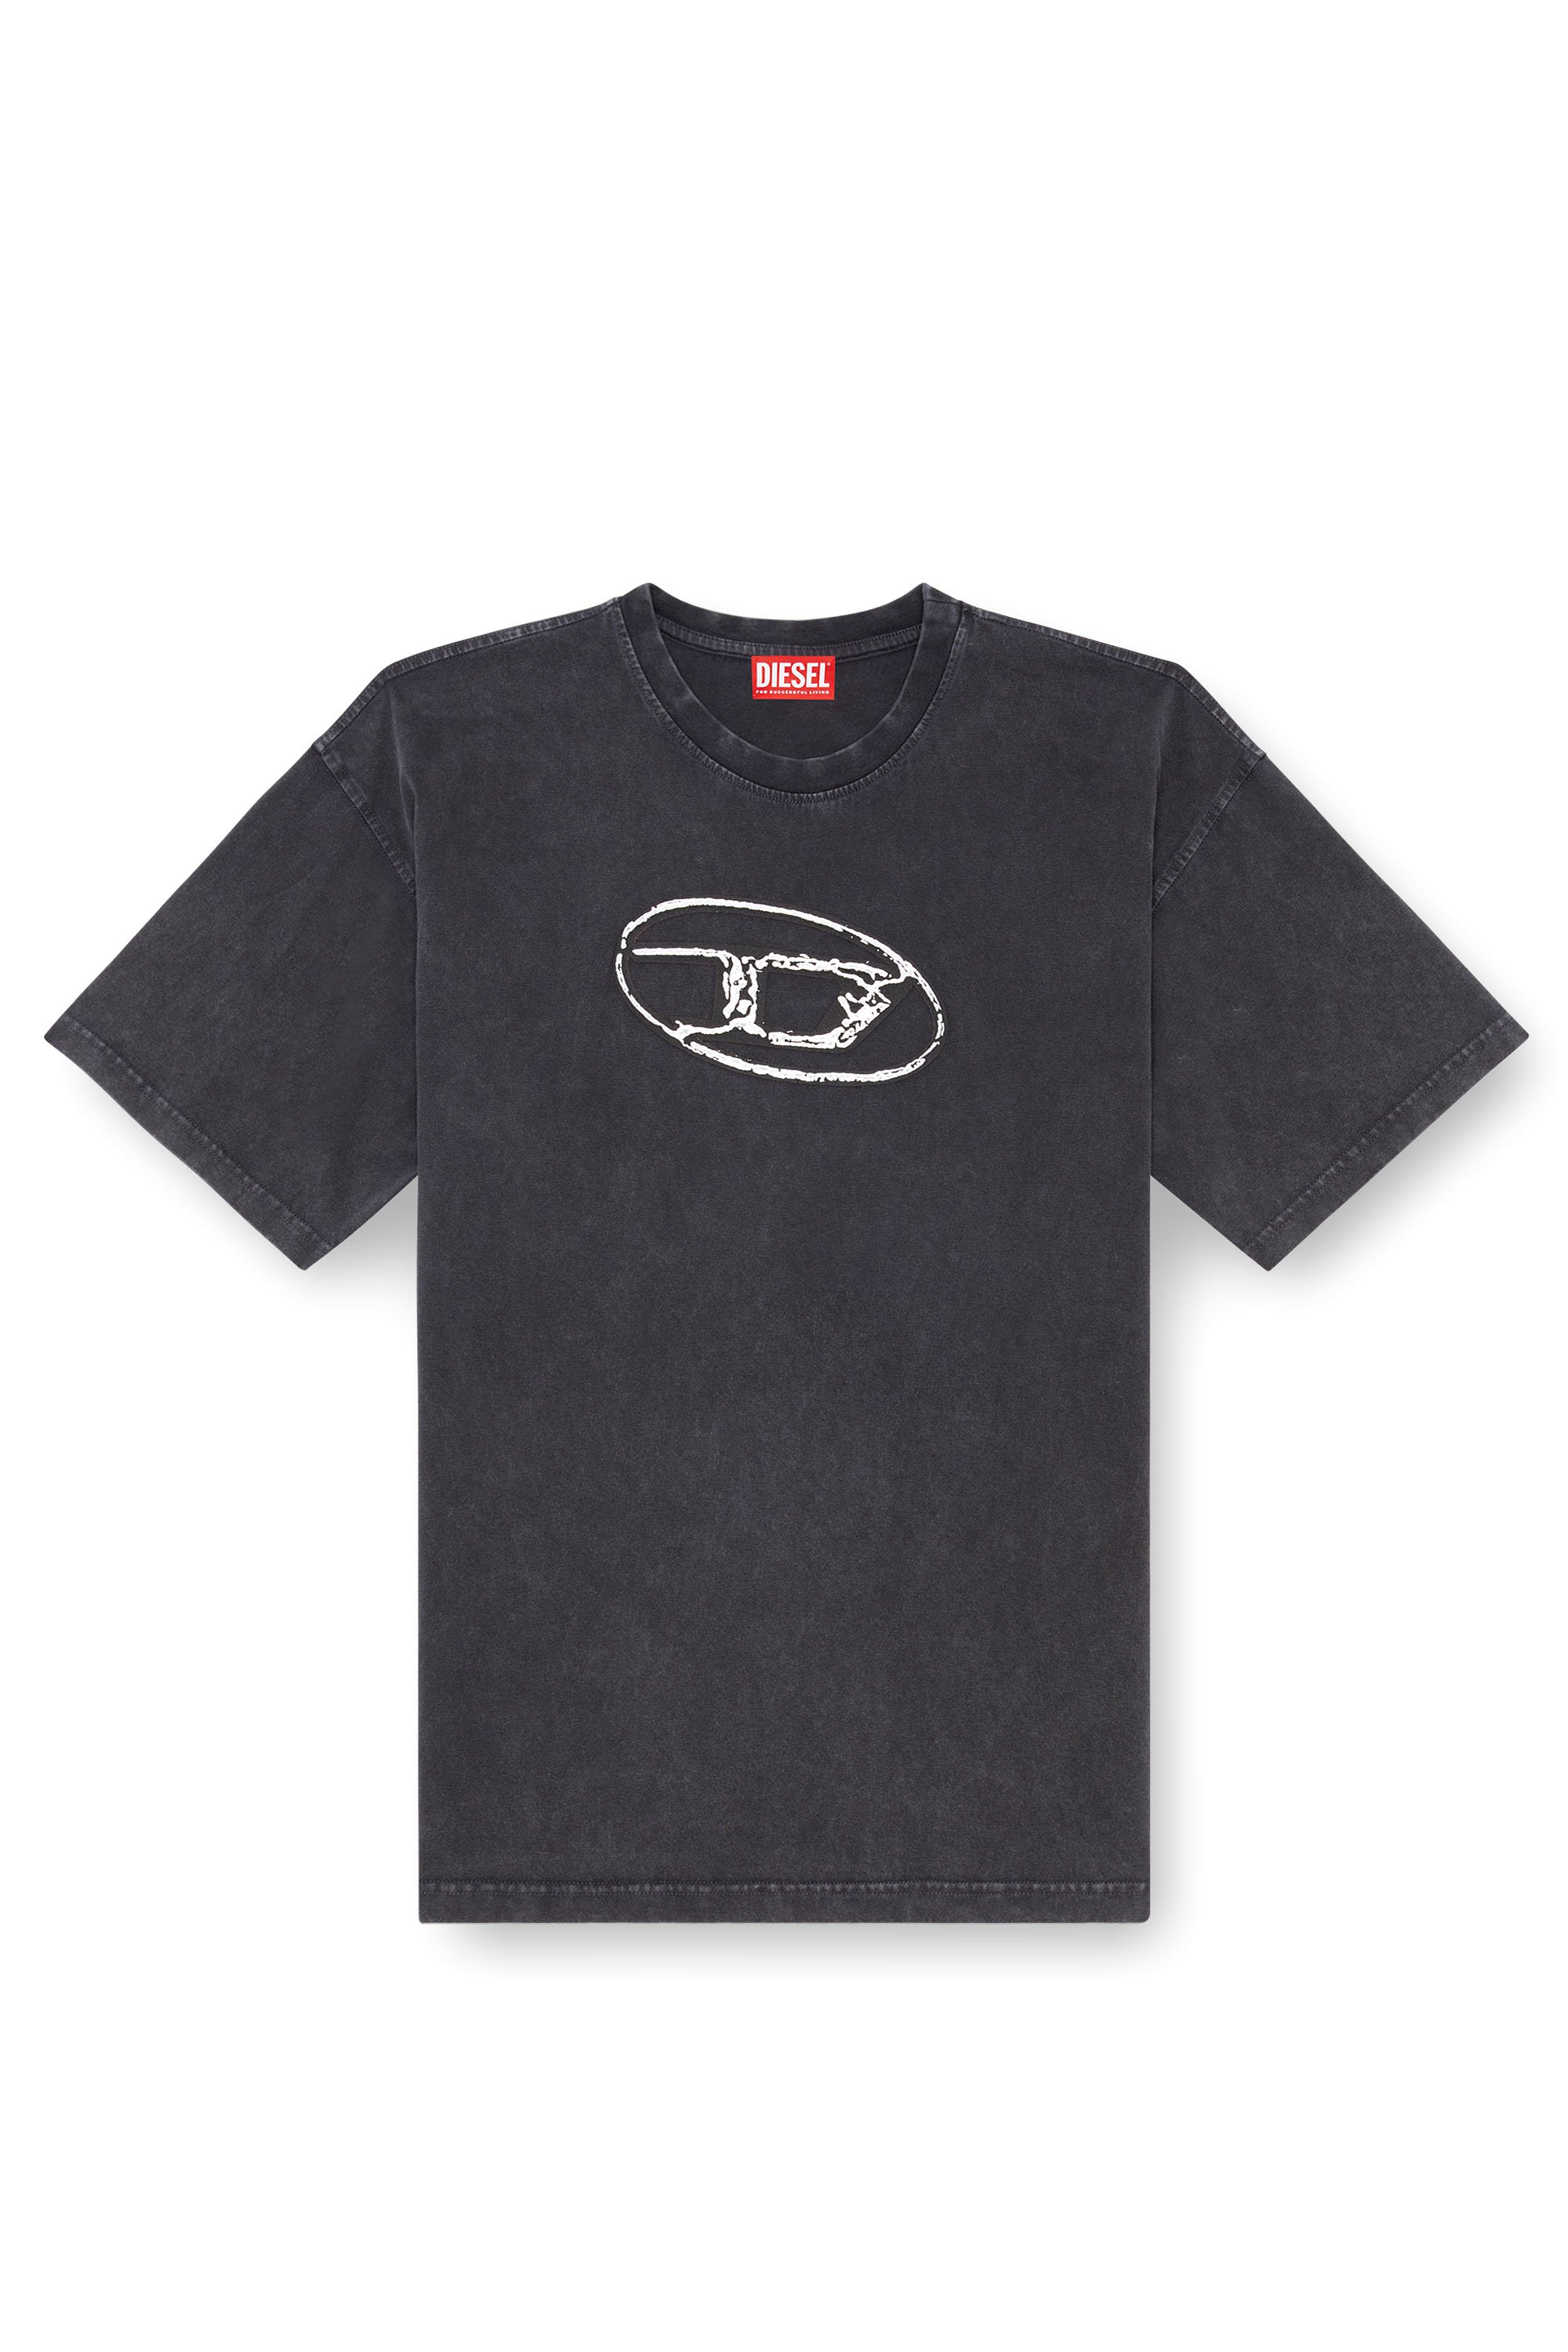 Diesel - T-BOXT-Q22, Hombre Camiseta desteñida con estampado Oval D in Negro - Image 1